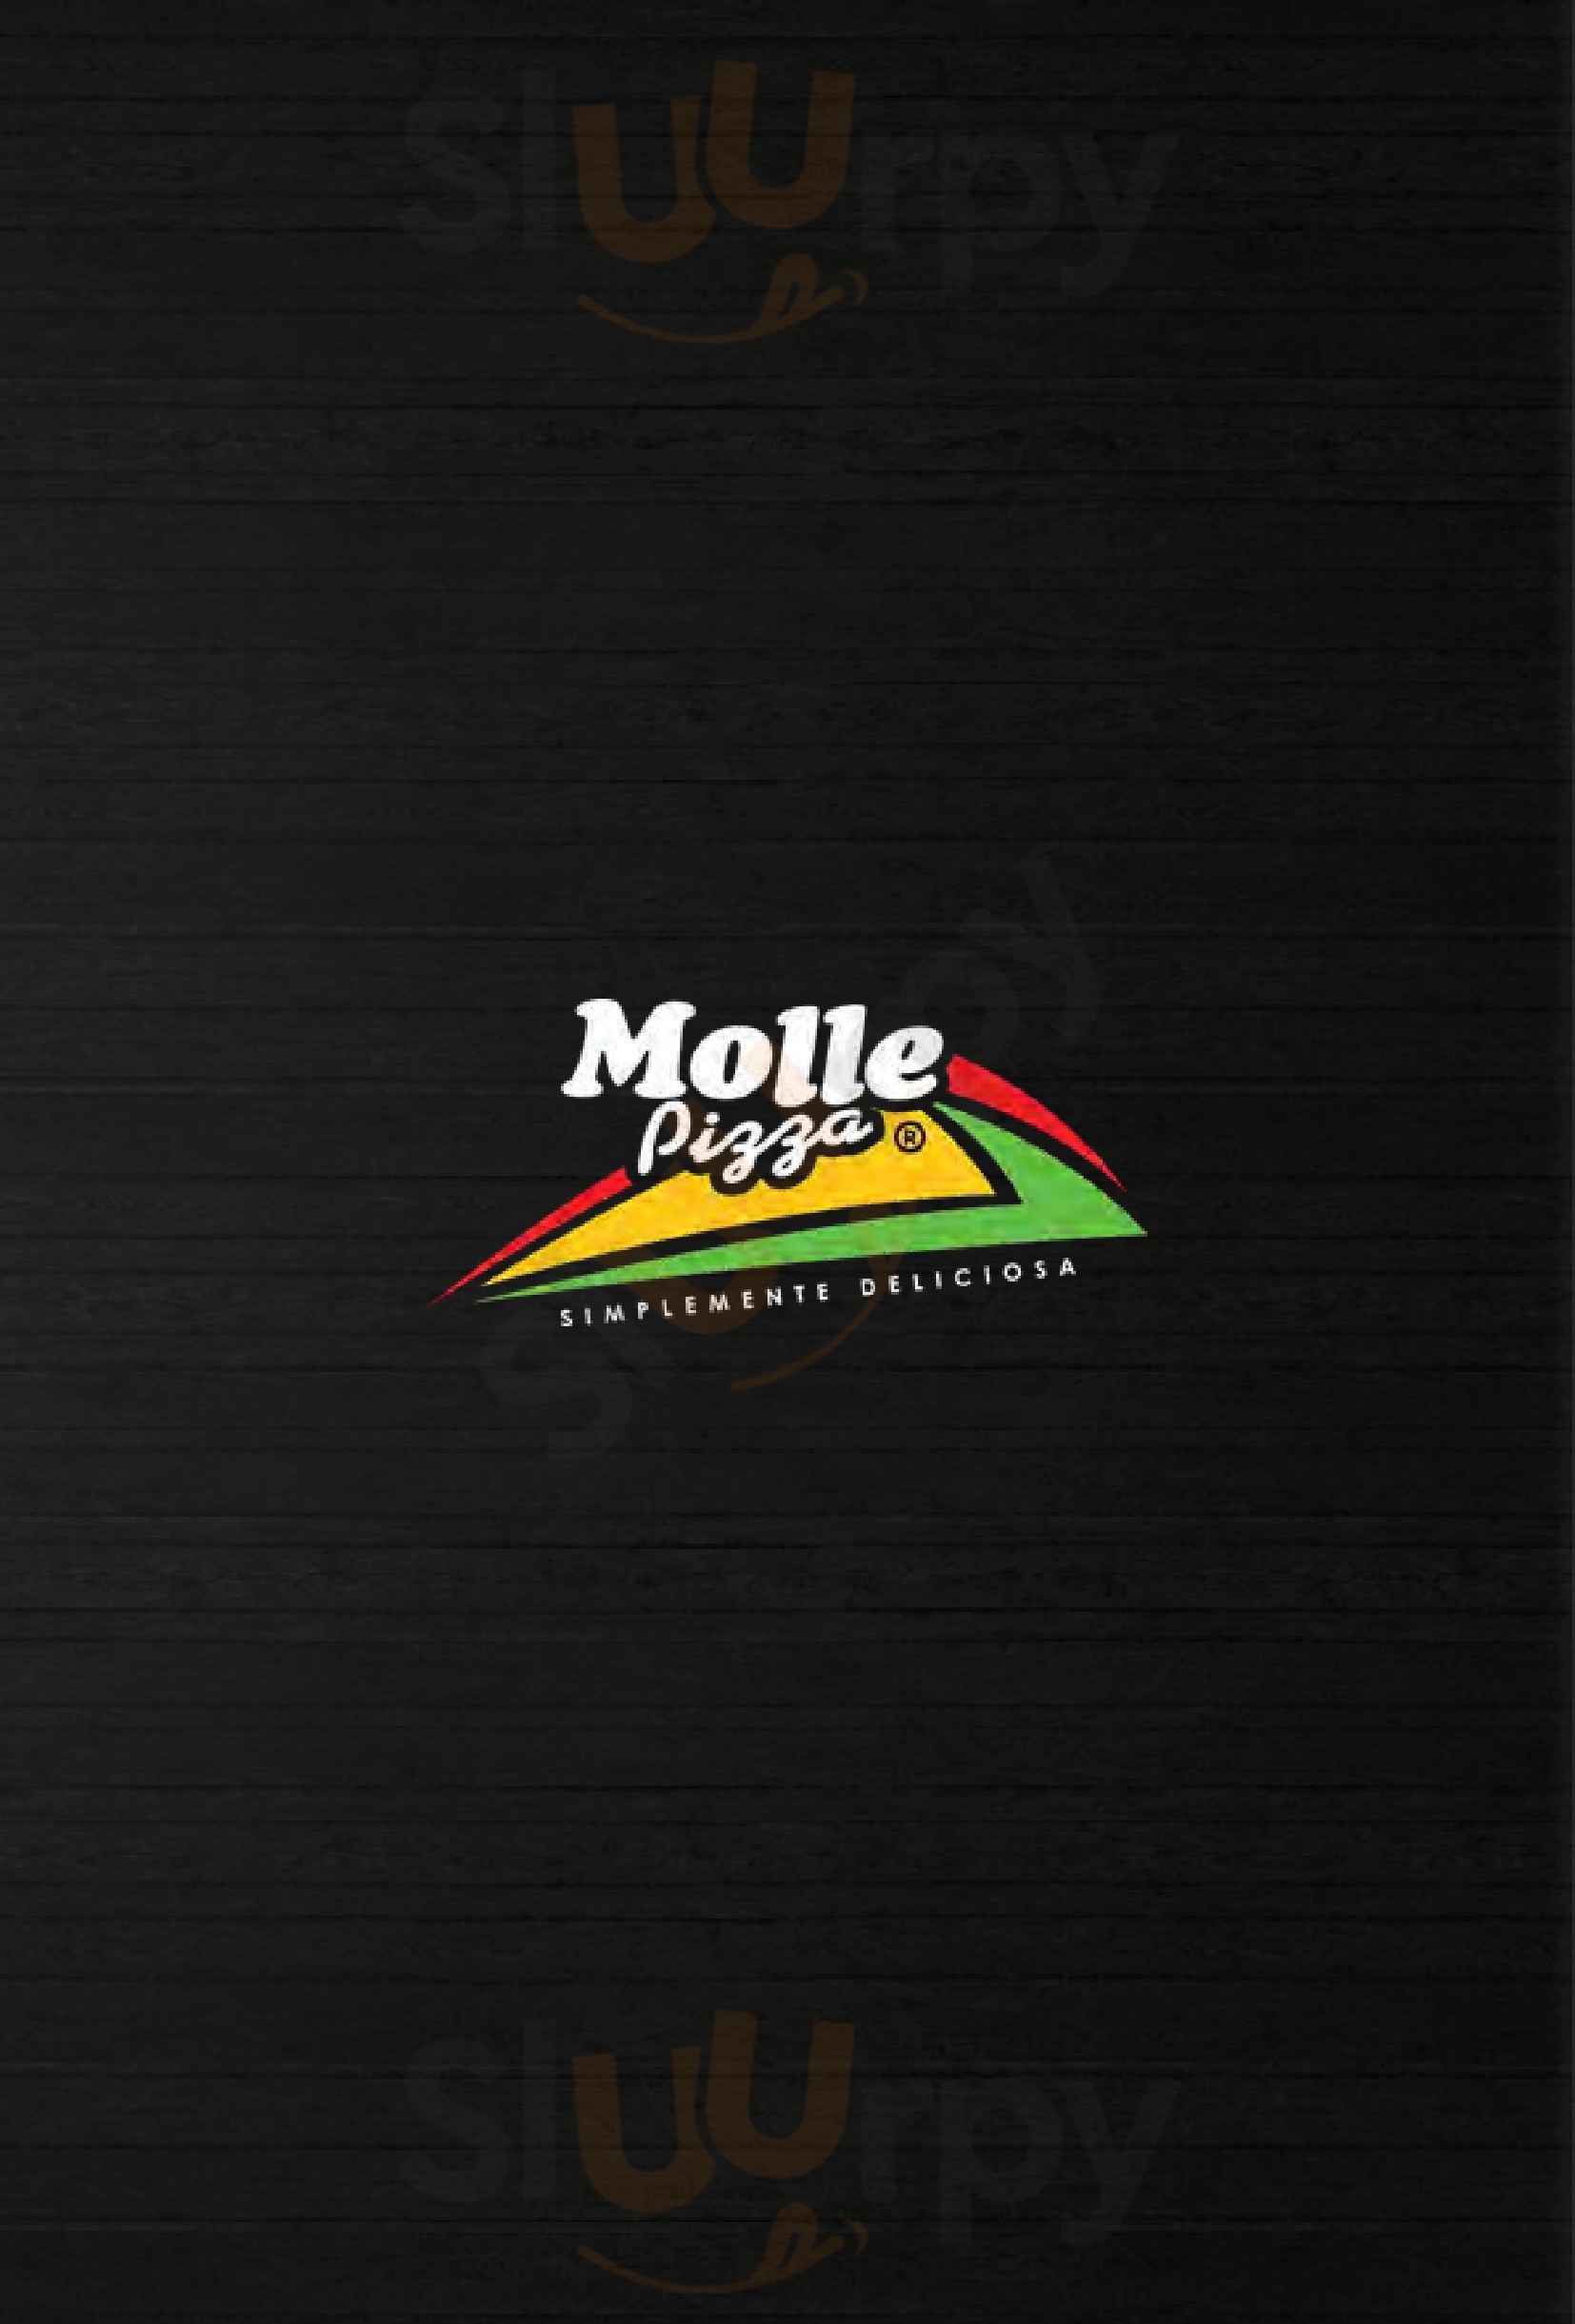 Molle Pizza Cali Menu - 1